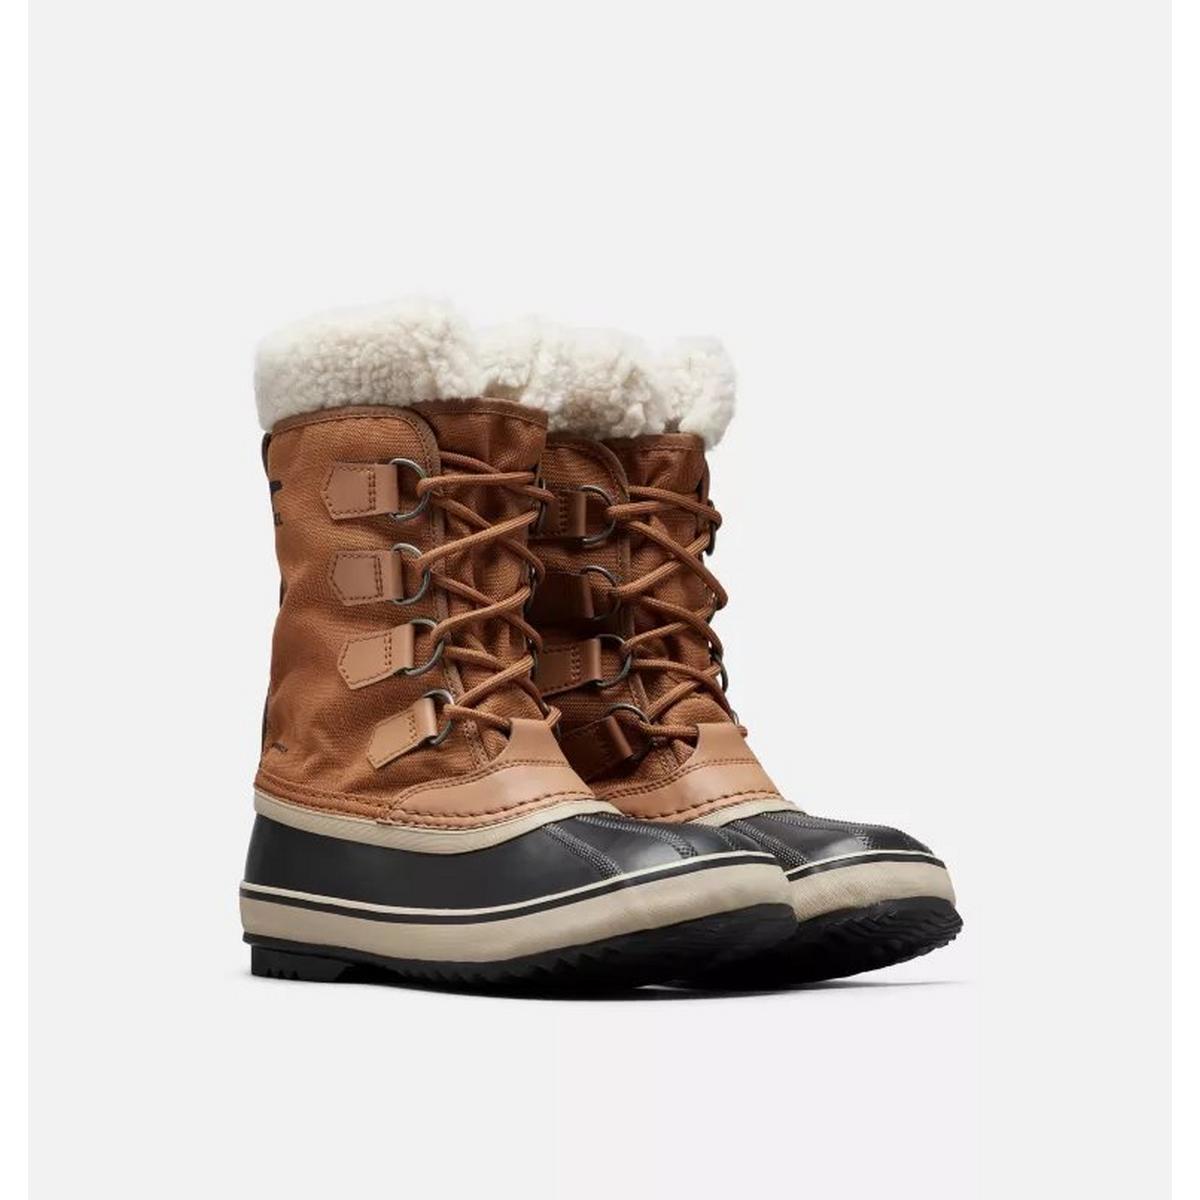 Sorel Winter Carnival Boots - Brown